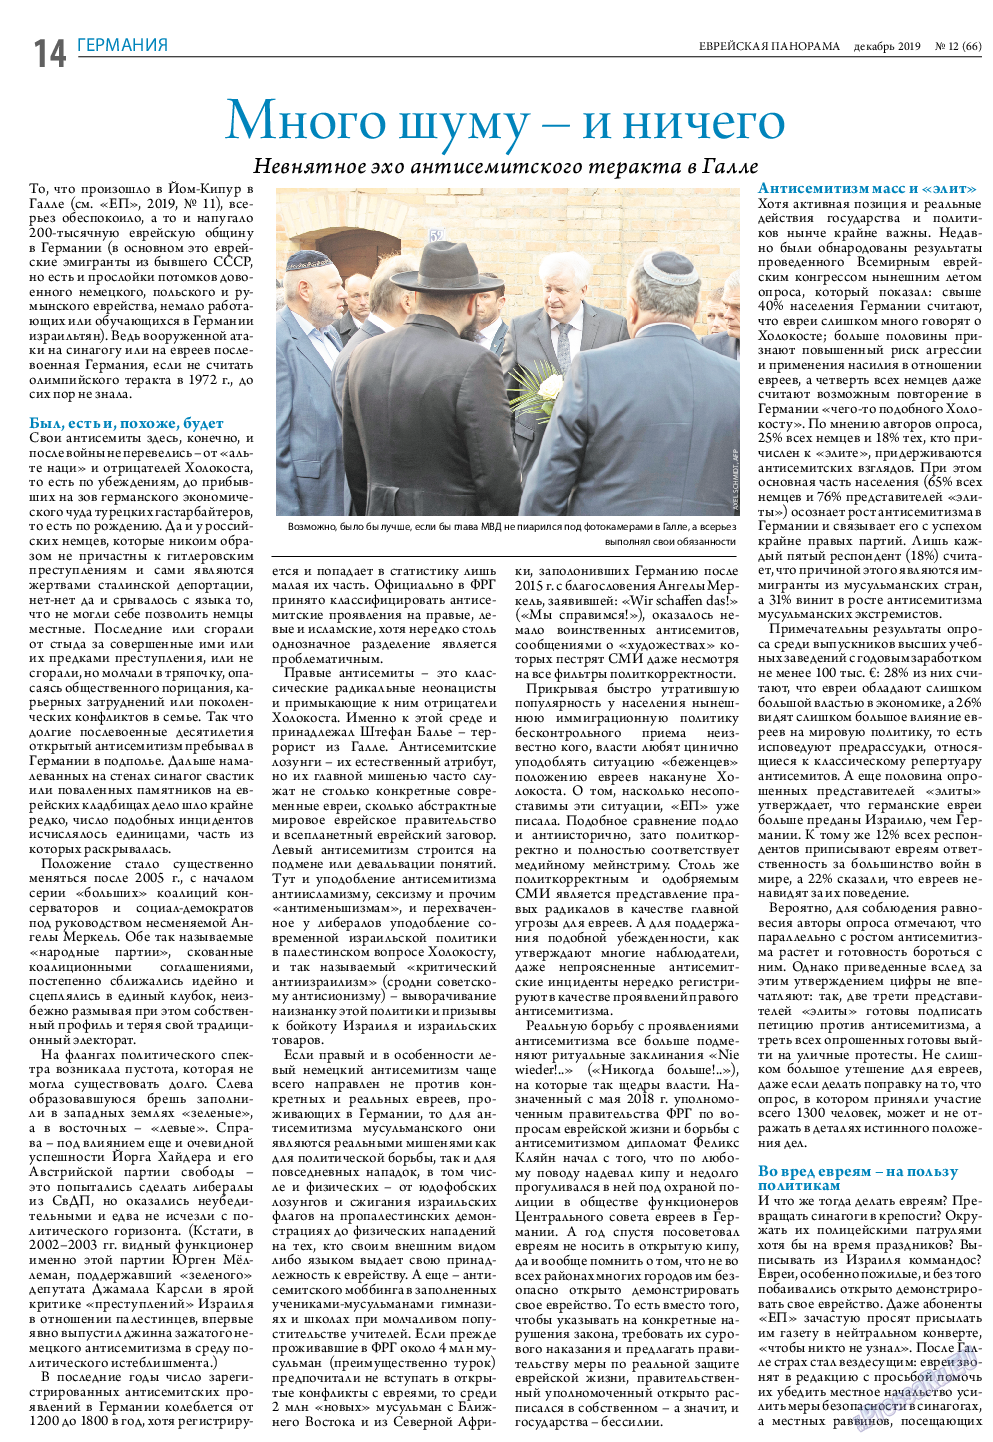 Еврейская панорама, газета. 2019 №12 стр.14